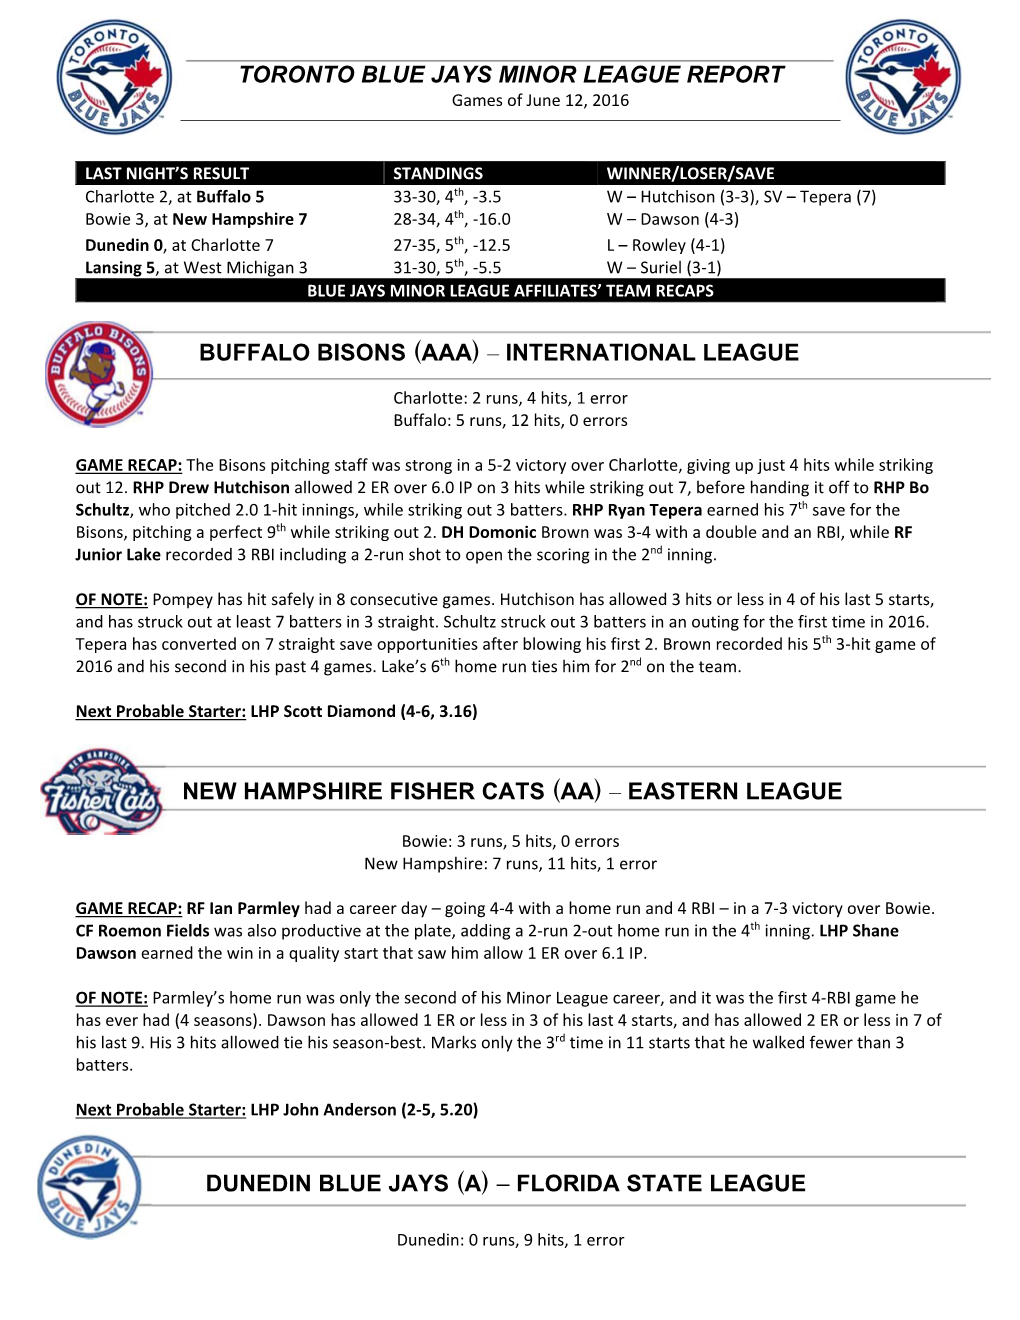 Toronto Blue Jays Minor League Report Buffalo